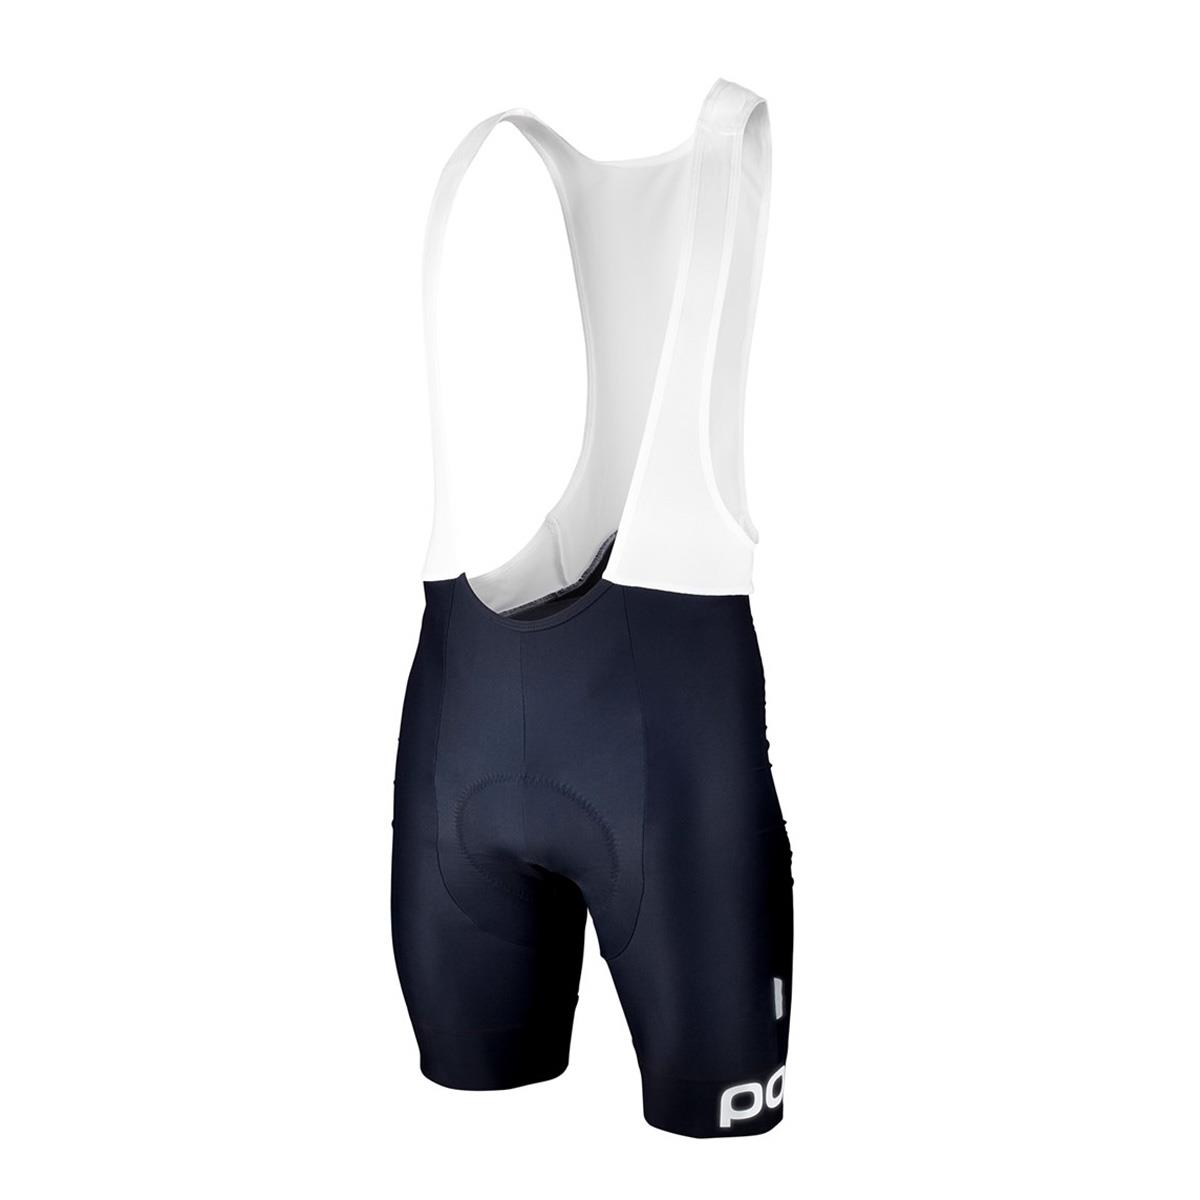 POC 2015 Men's Contour Bib Cycling Shorts   55210 (Navy Black   S)